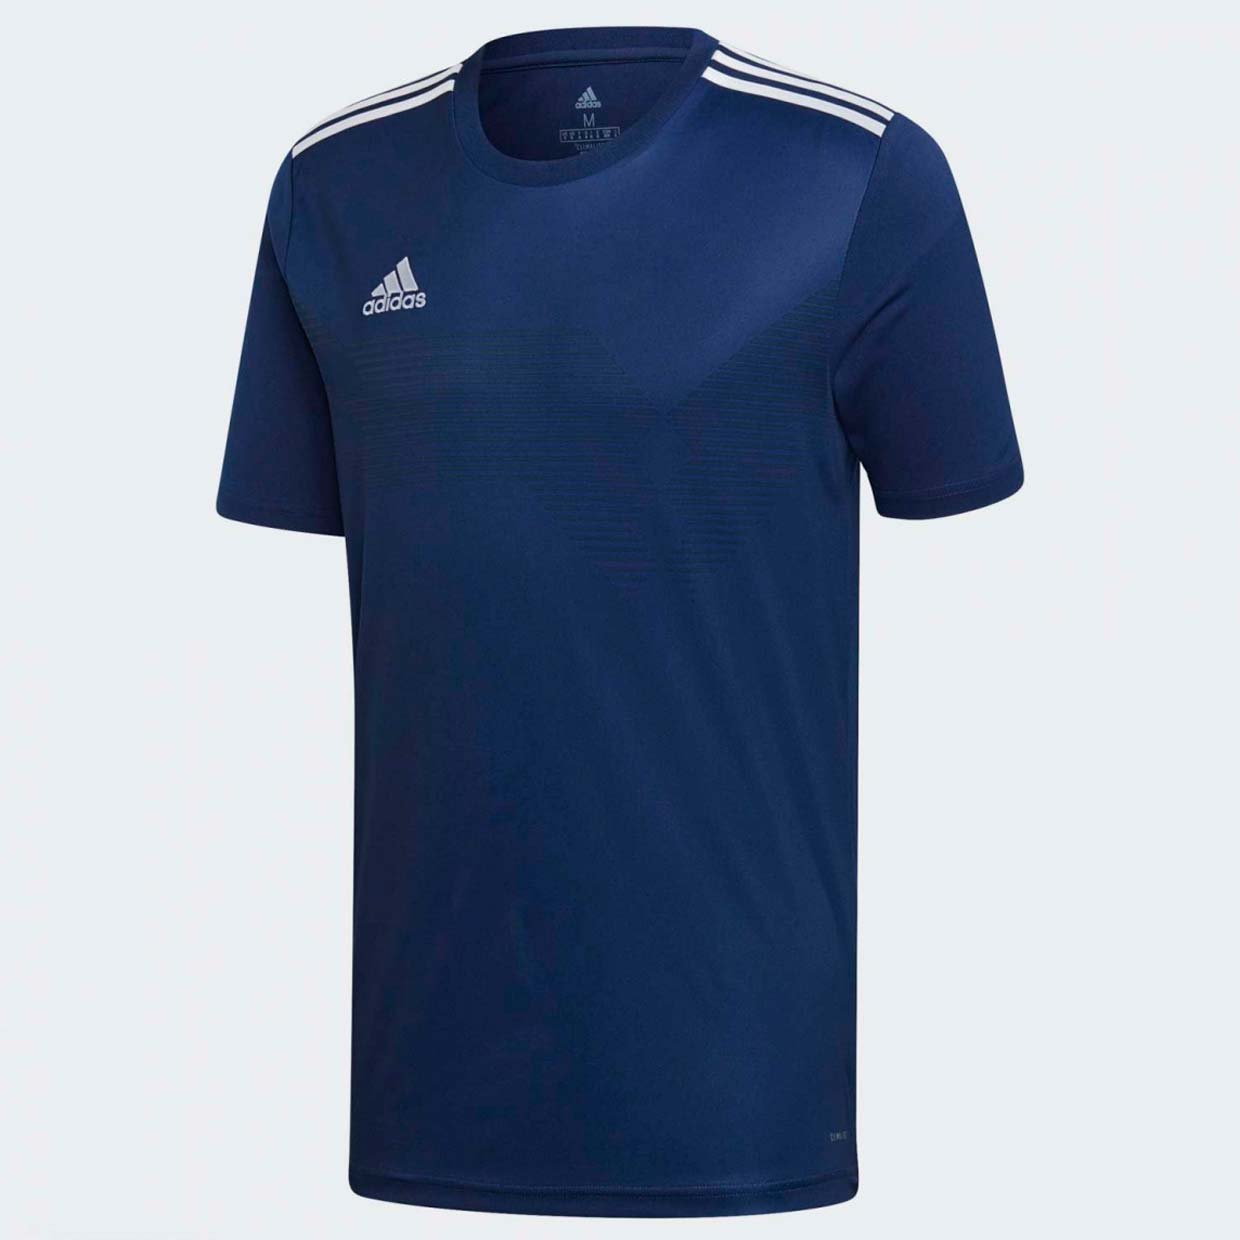 Футболка Adidas CAMPEON 19 (синяя)